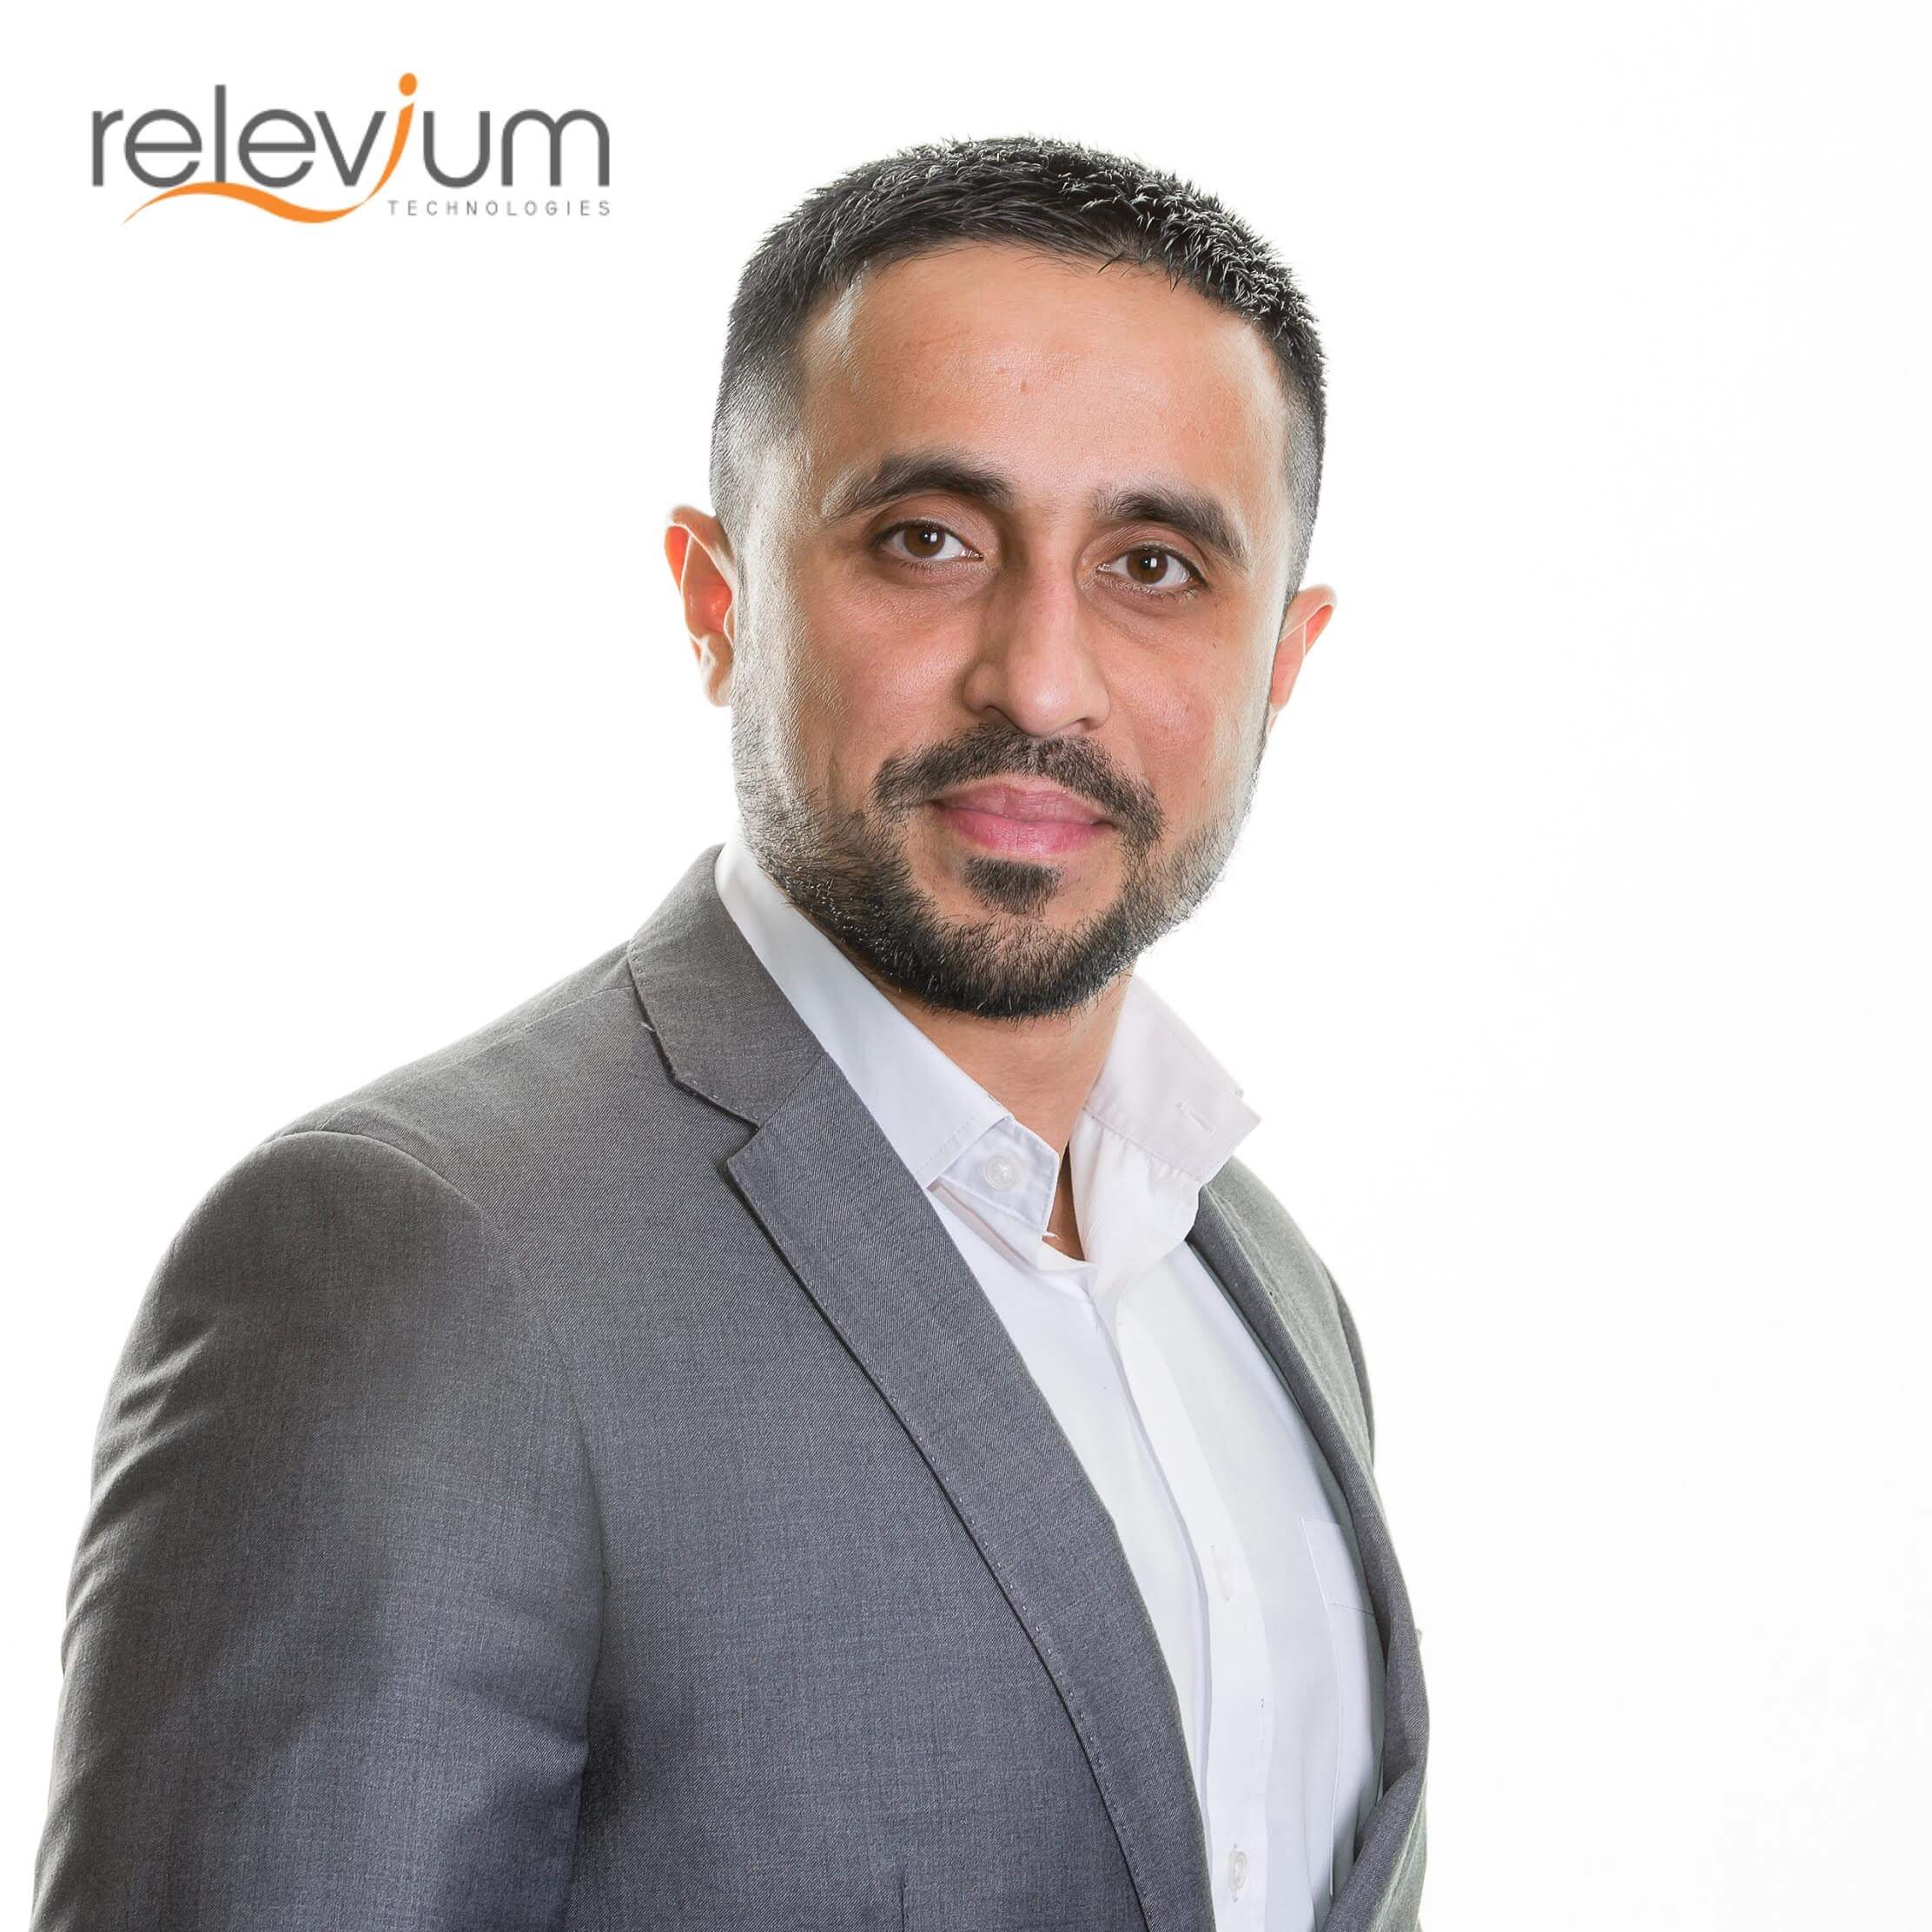 Abis Hussain, Senior Marketing Officer at Relevium Technologies Inc.